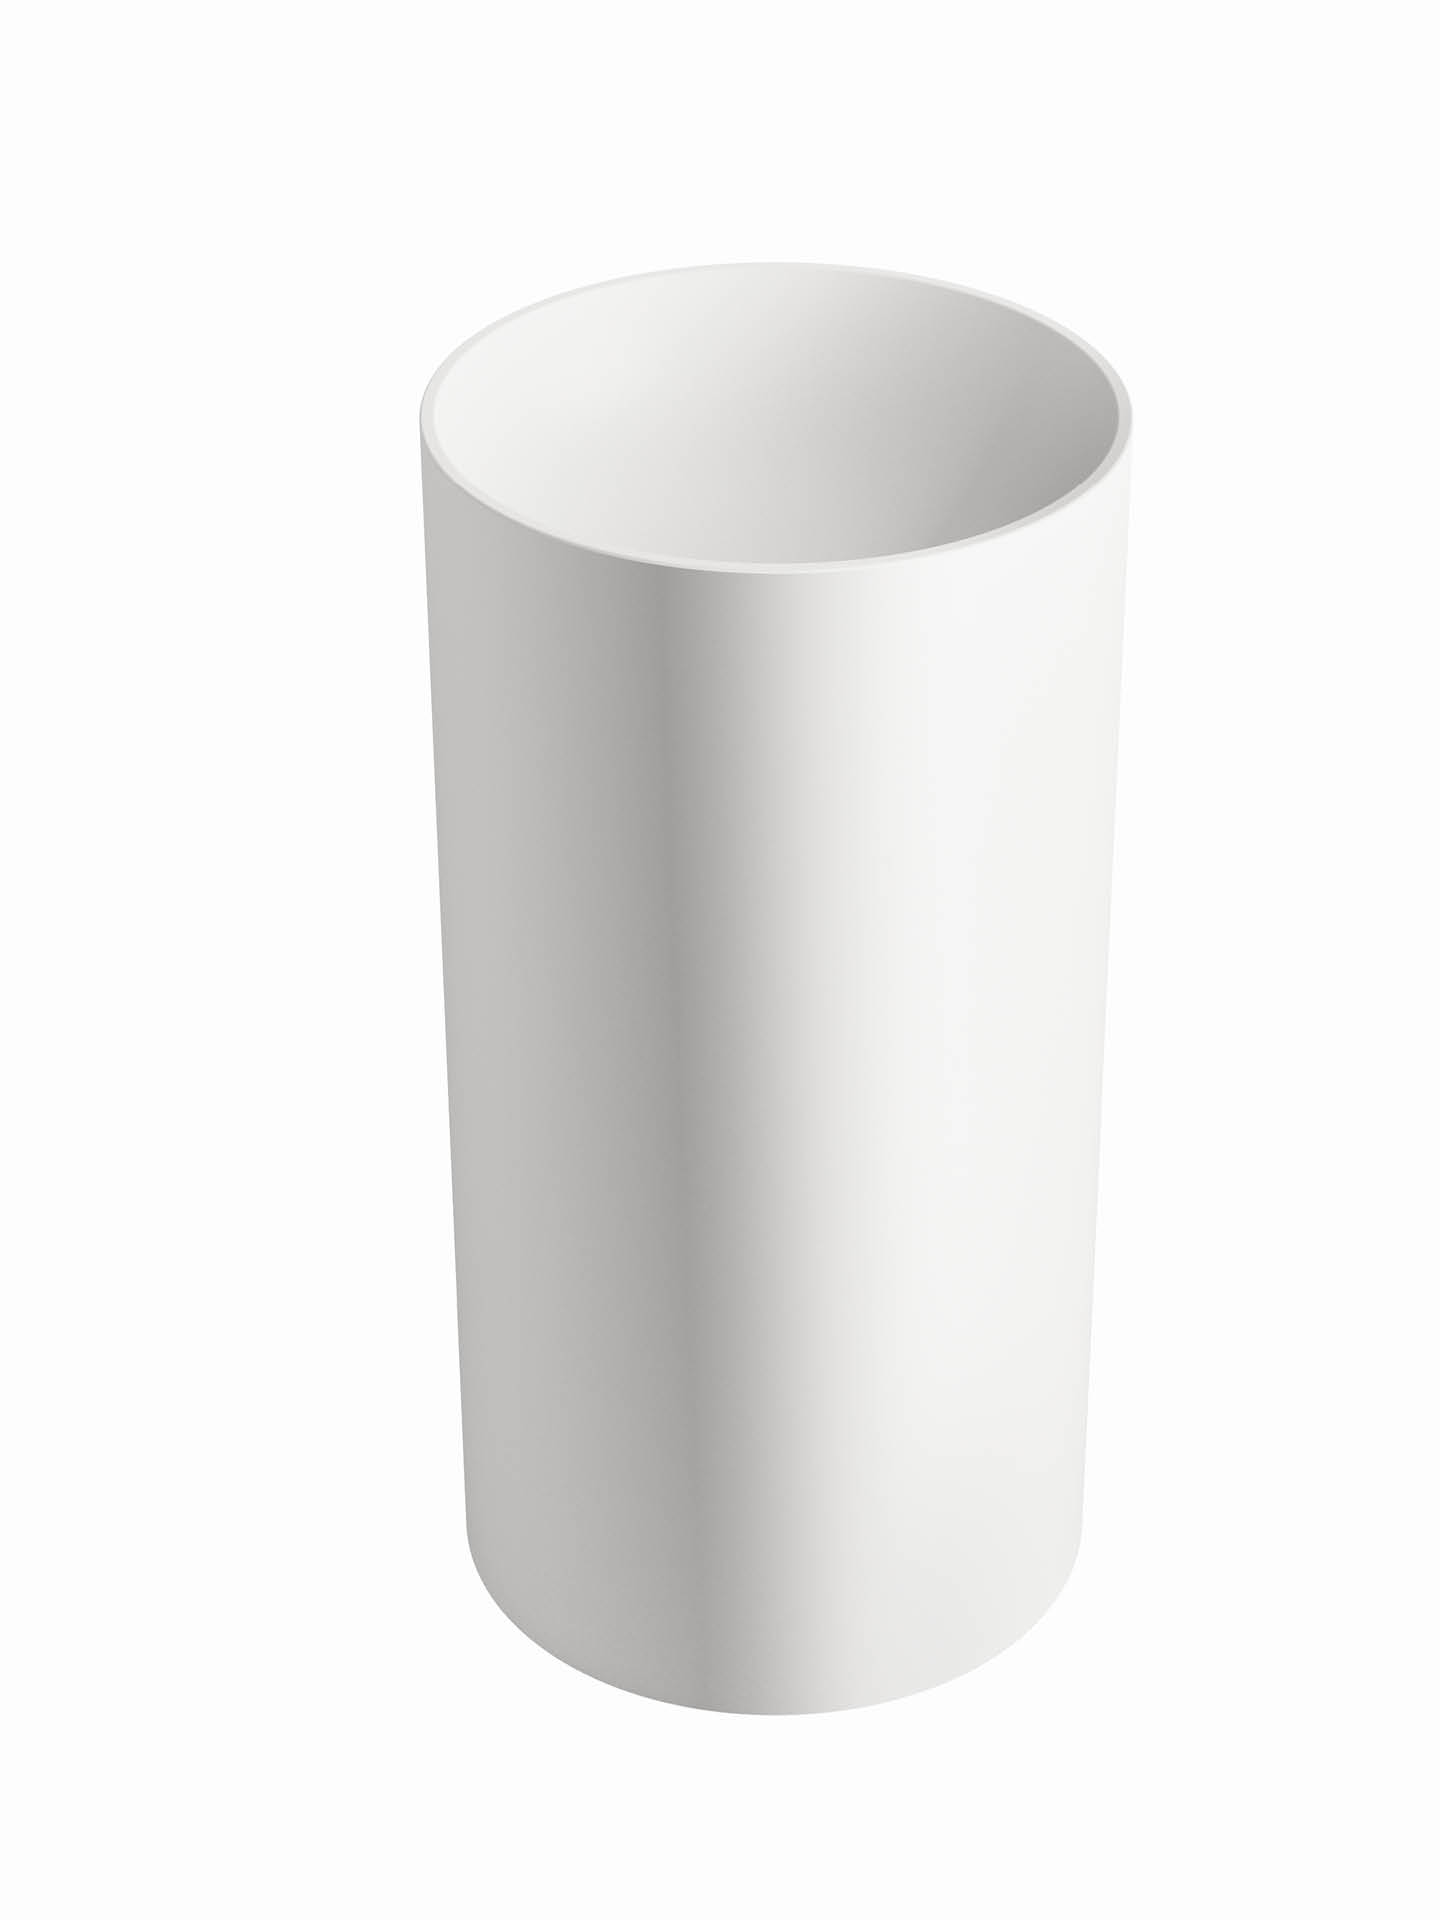 Calla lavabo freestanding in solid surface dal colore bianco